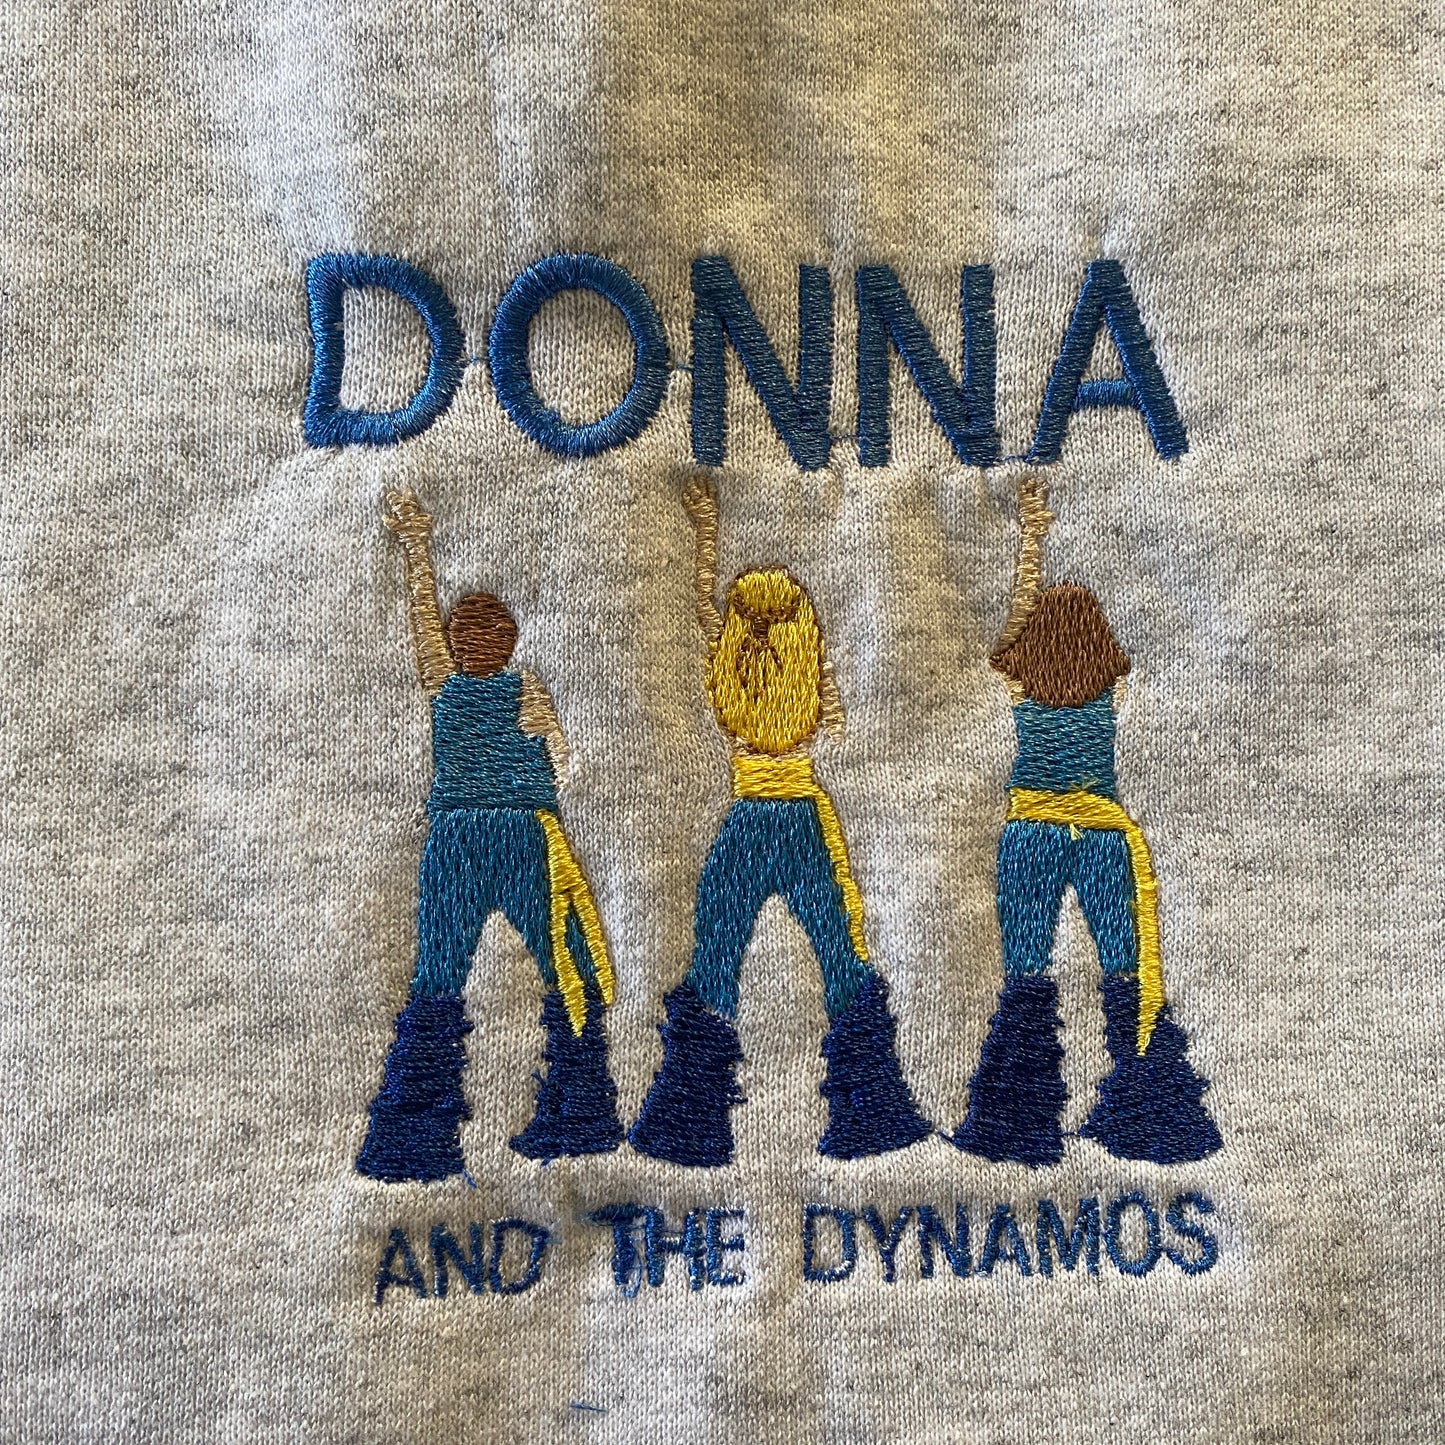 Donna and the dynamos sweatshirt - Large Grey (please read description)